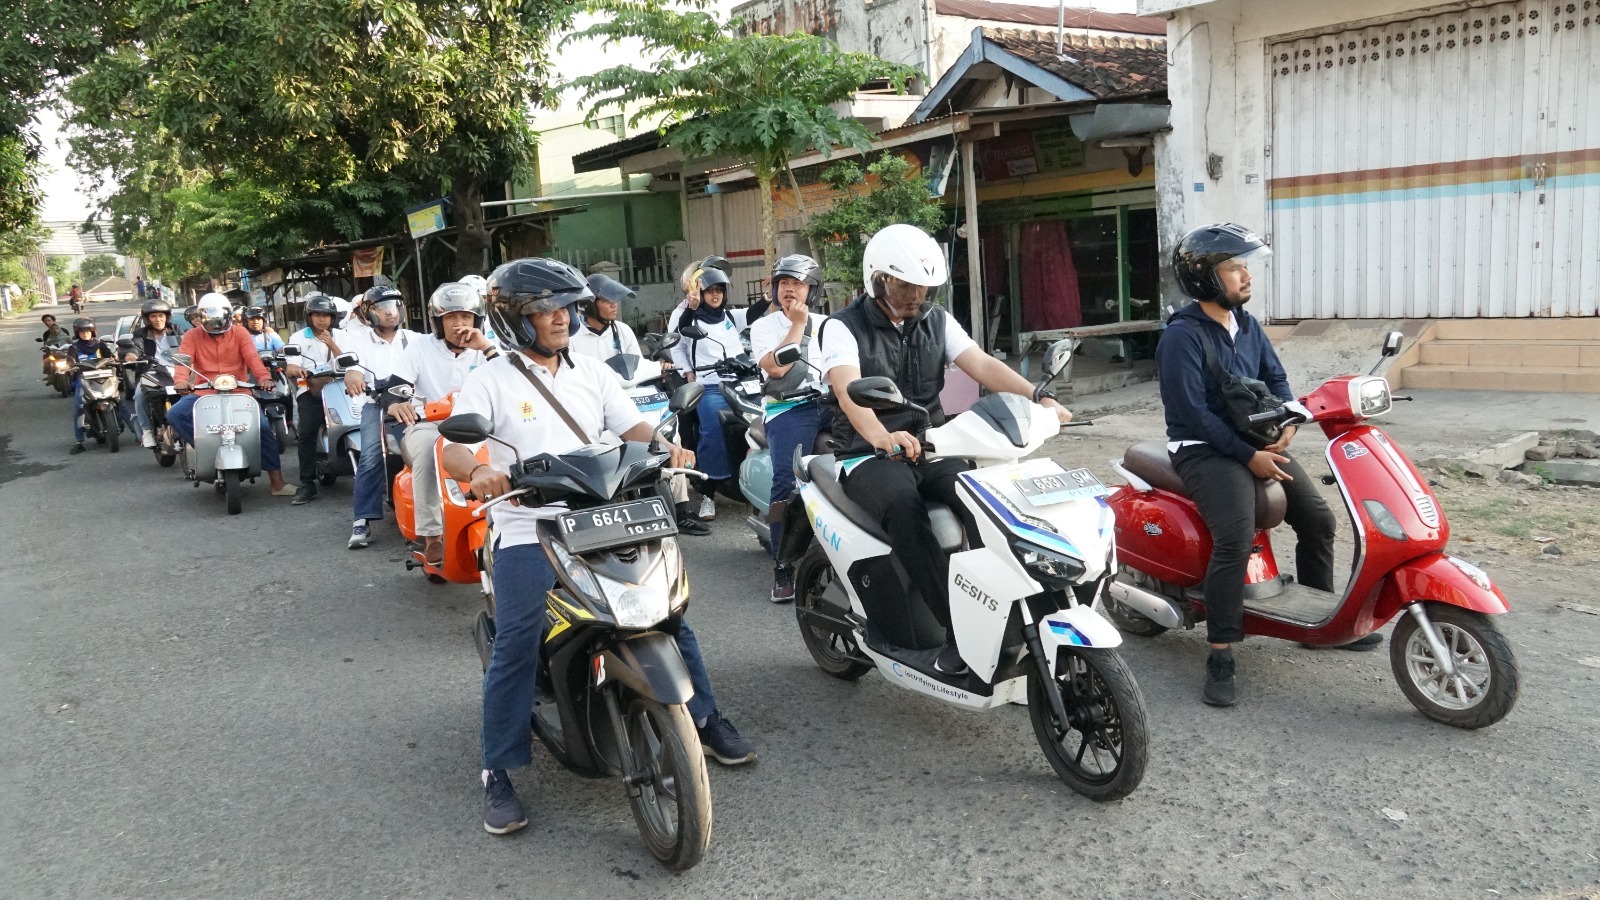 PLN-Komunitas Traccher Konvoi Kendaraan Listrik di Situbondo: Menuju Indonesia Hijau!